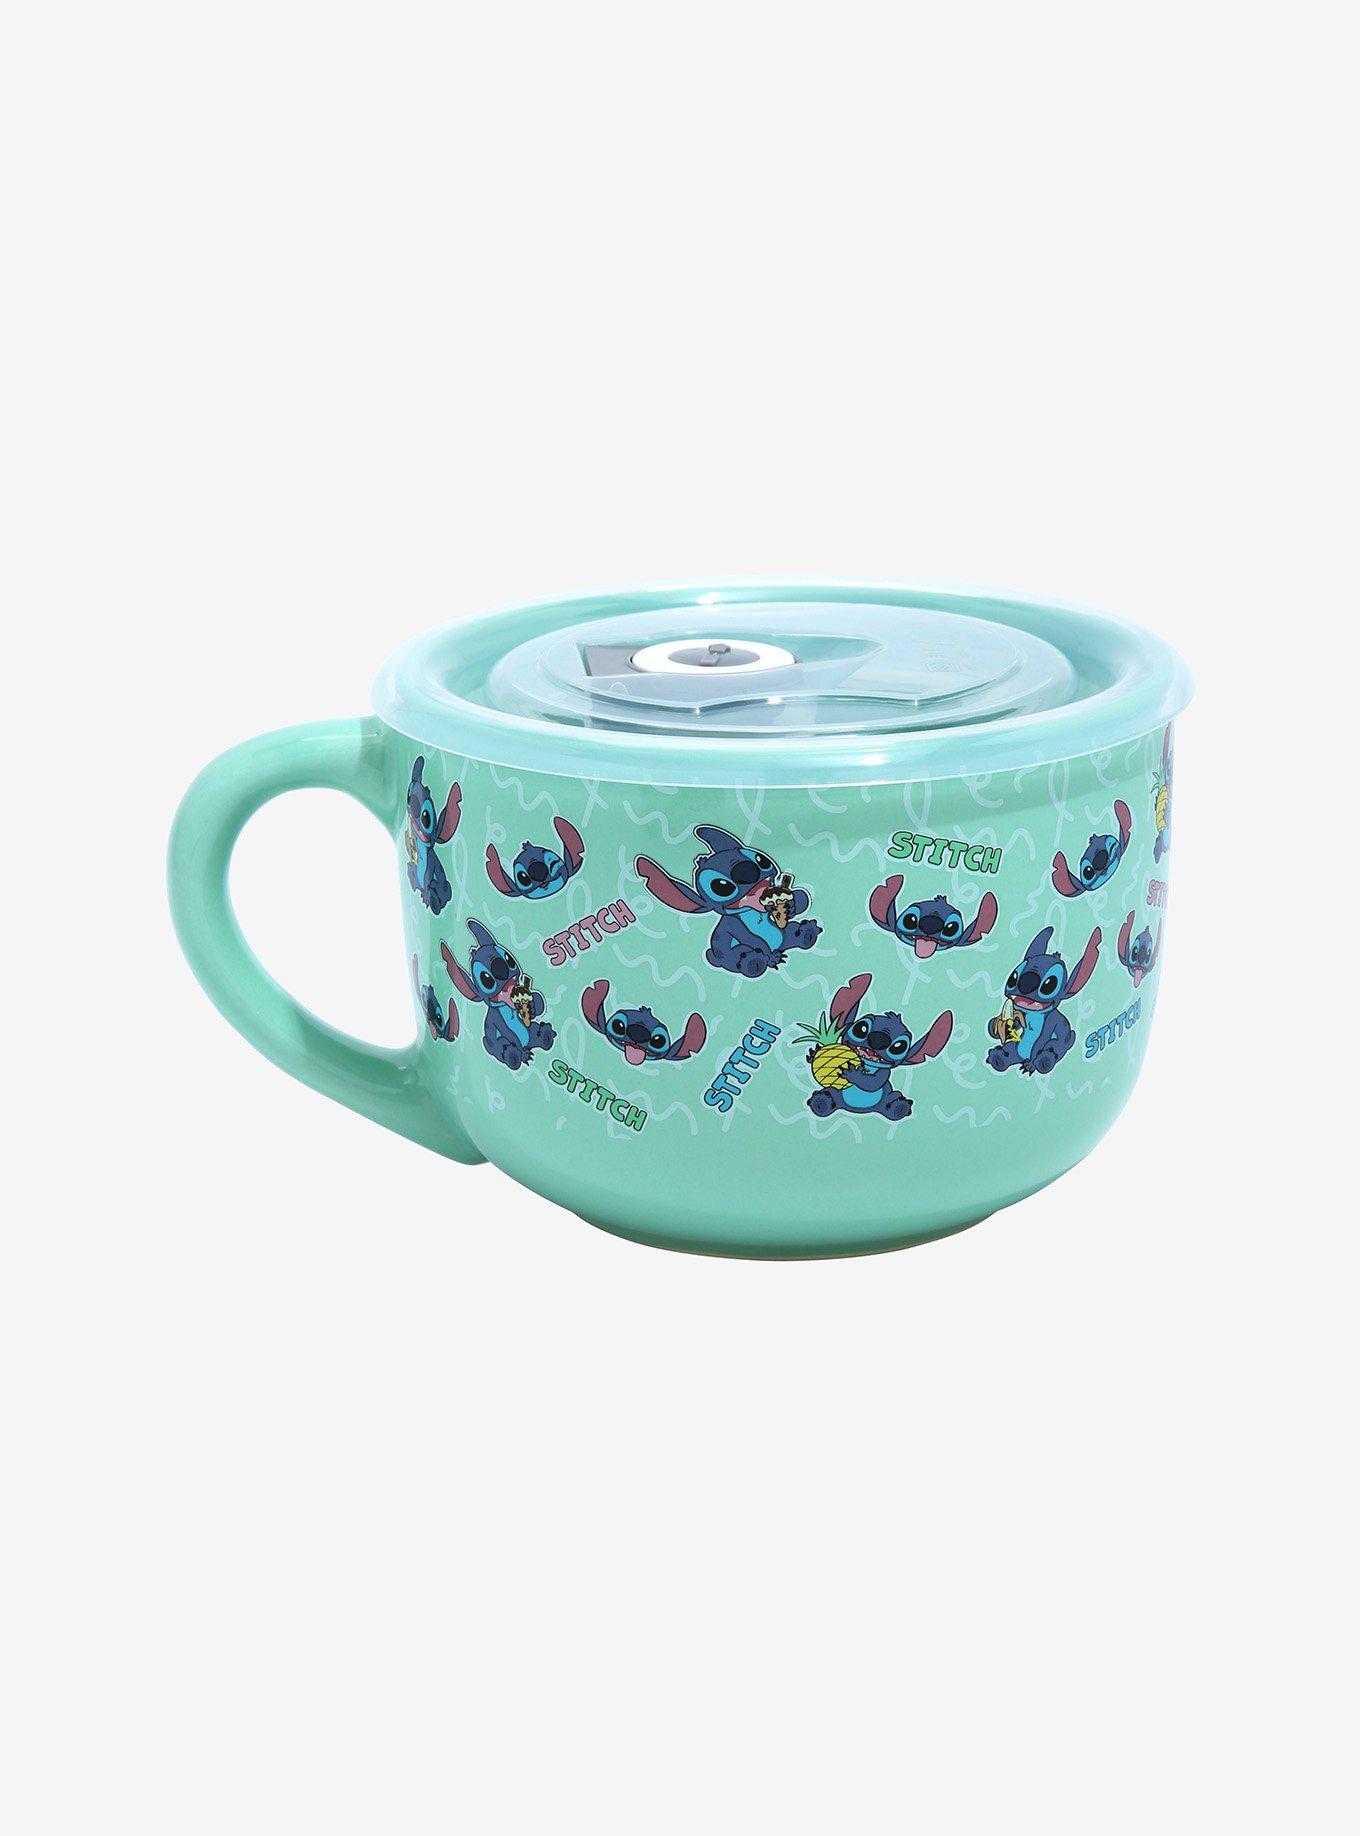 Chip & Dale Coffee Mug, Disney Coffee Mug, Personalized Coffee Mug, 